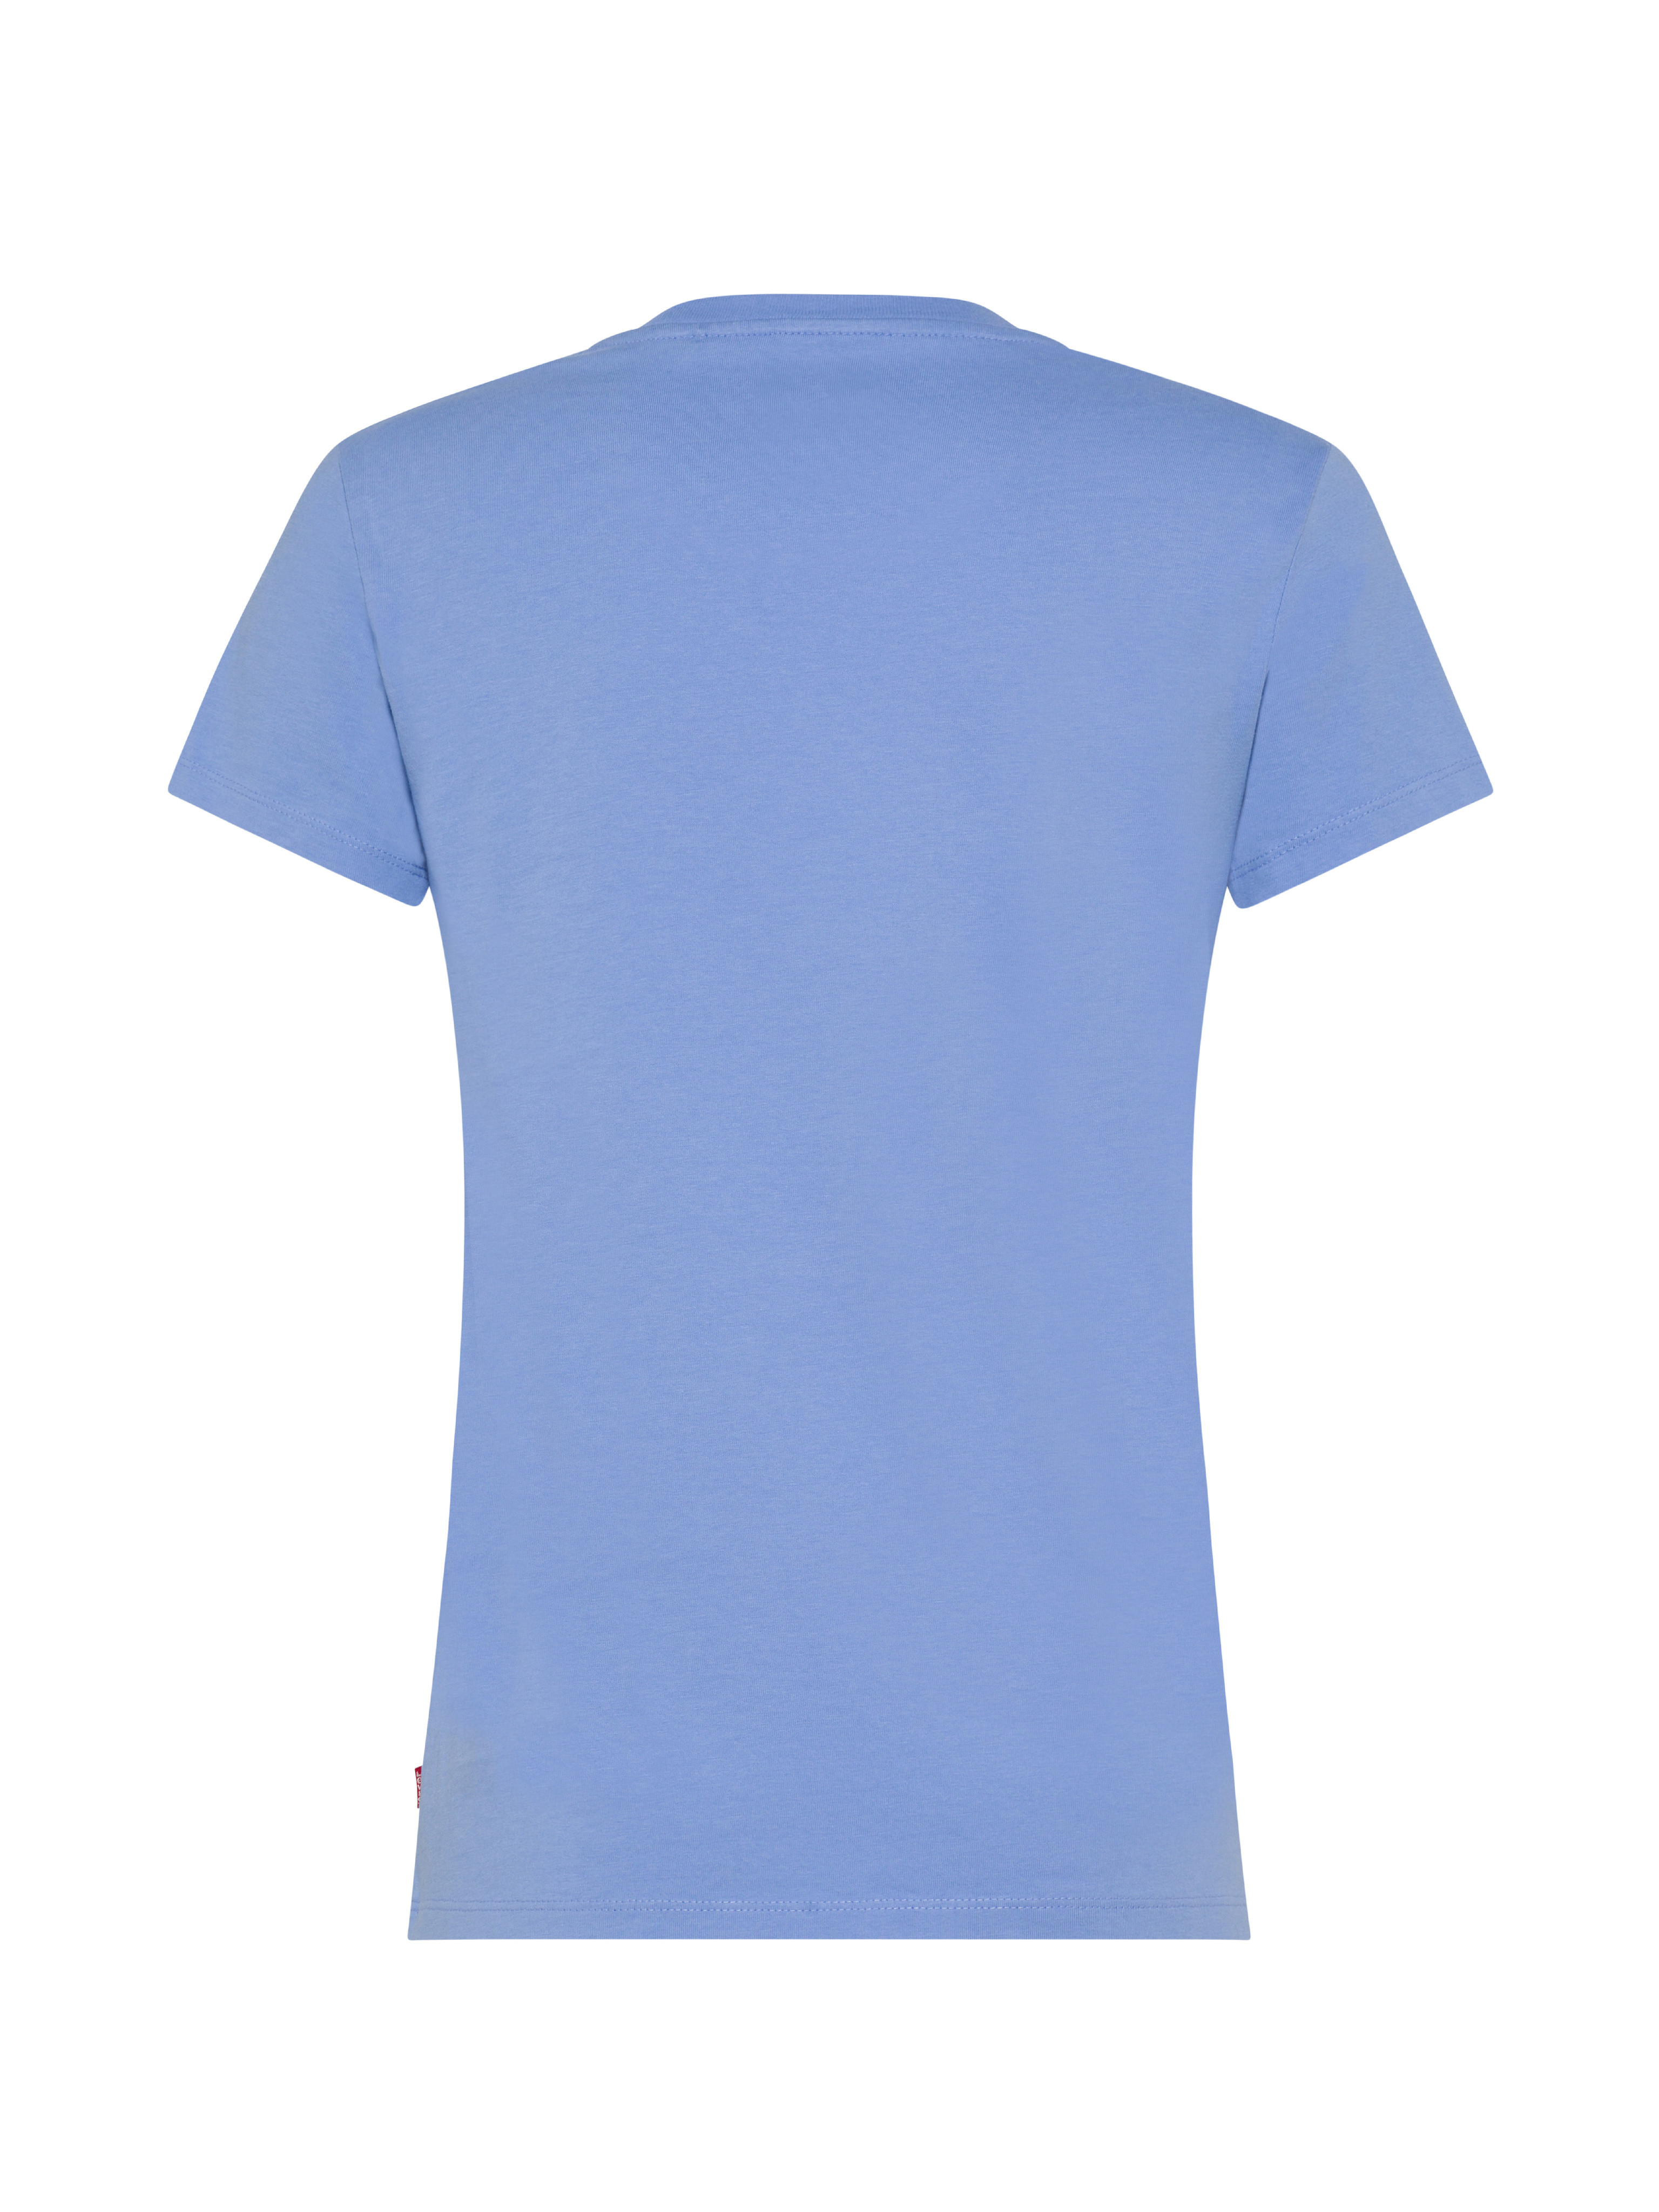 Levi's - T-shirt con logo floreale, Azzurro, large image number 1